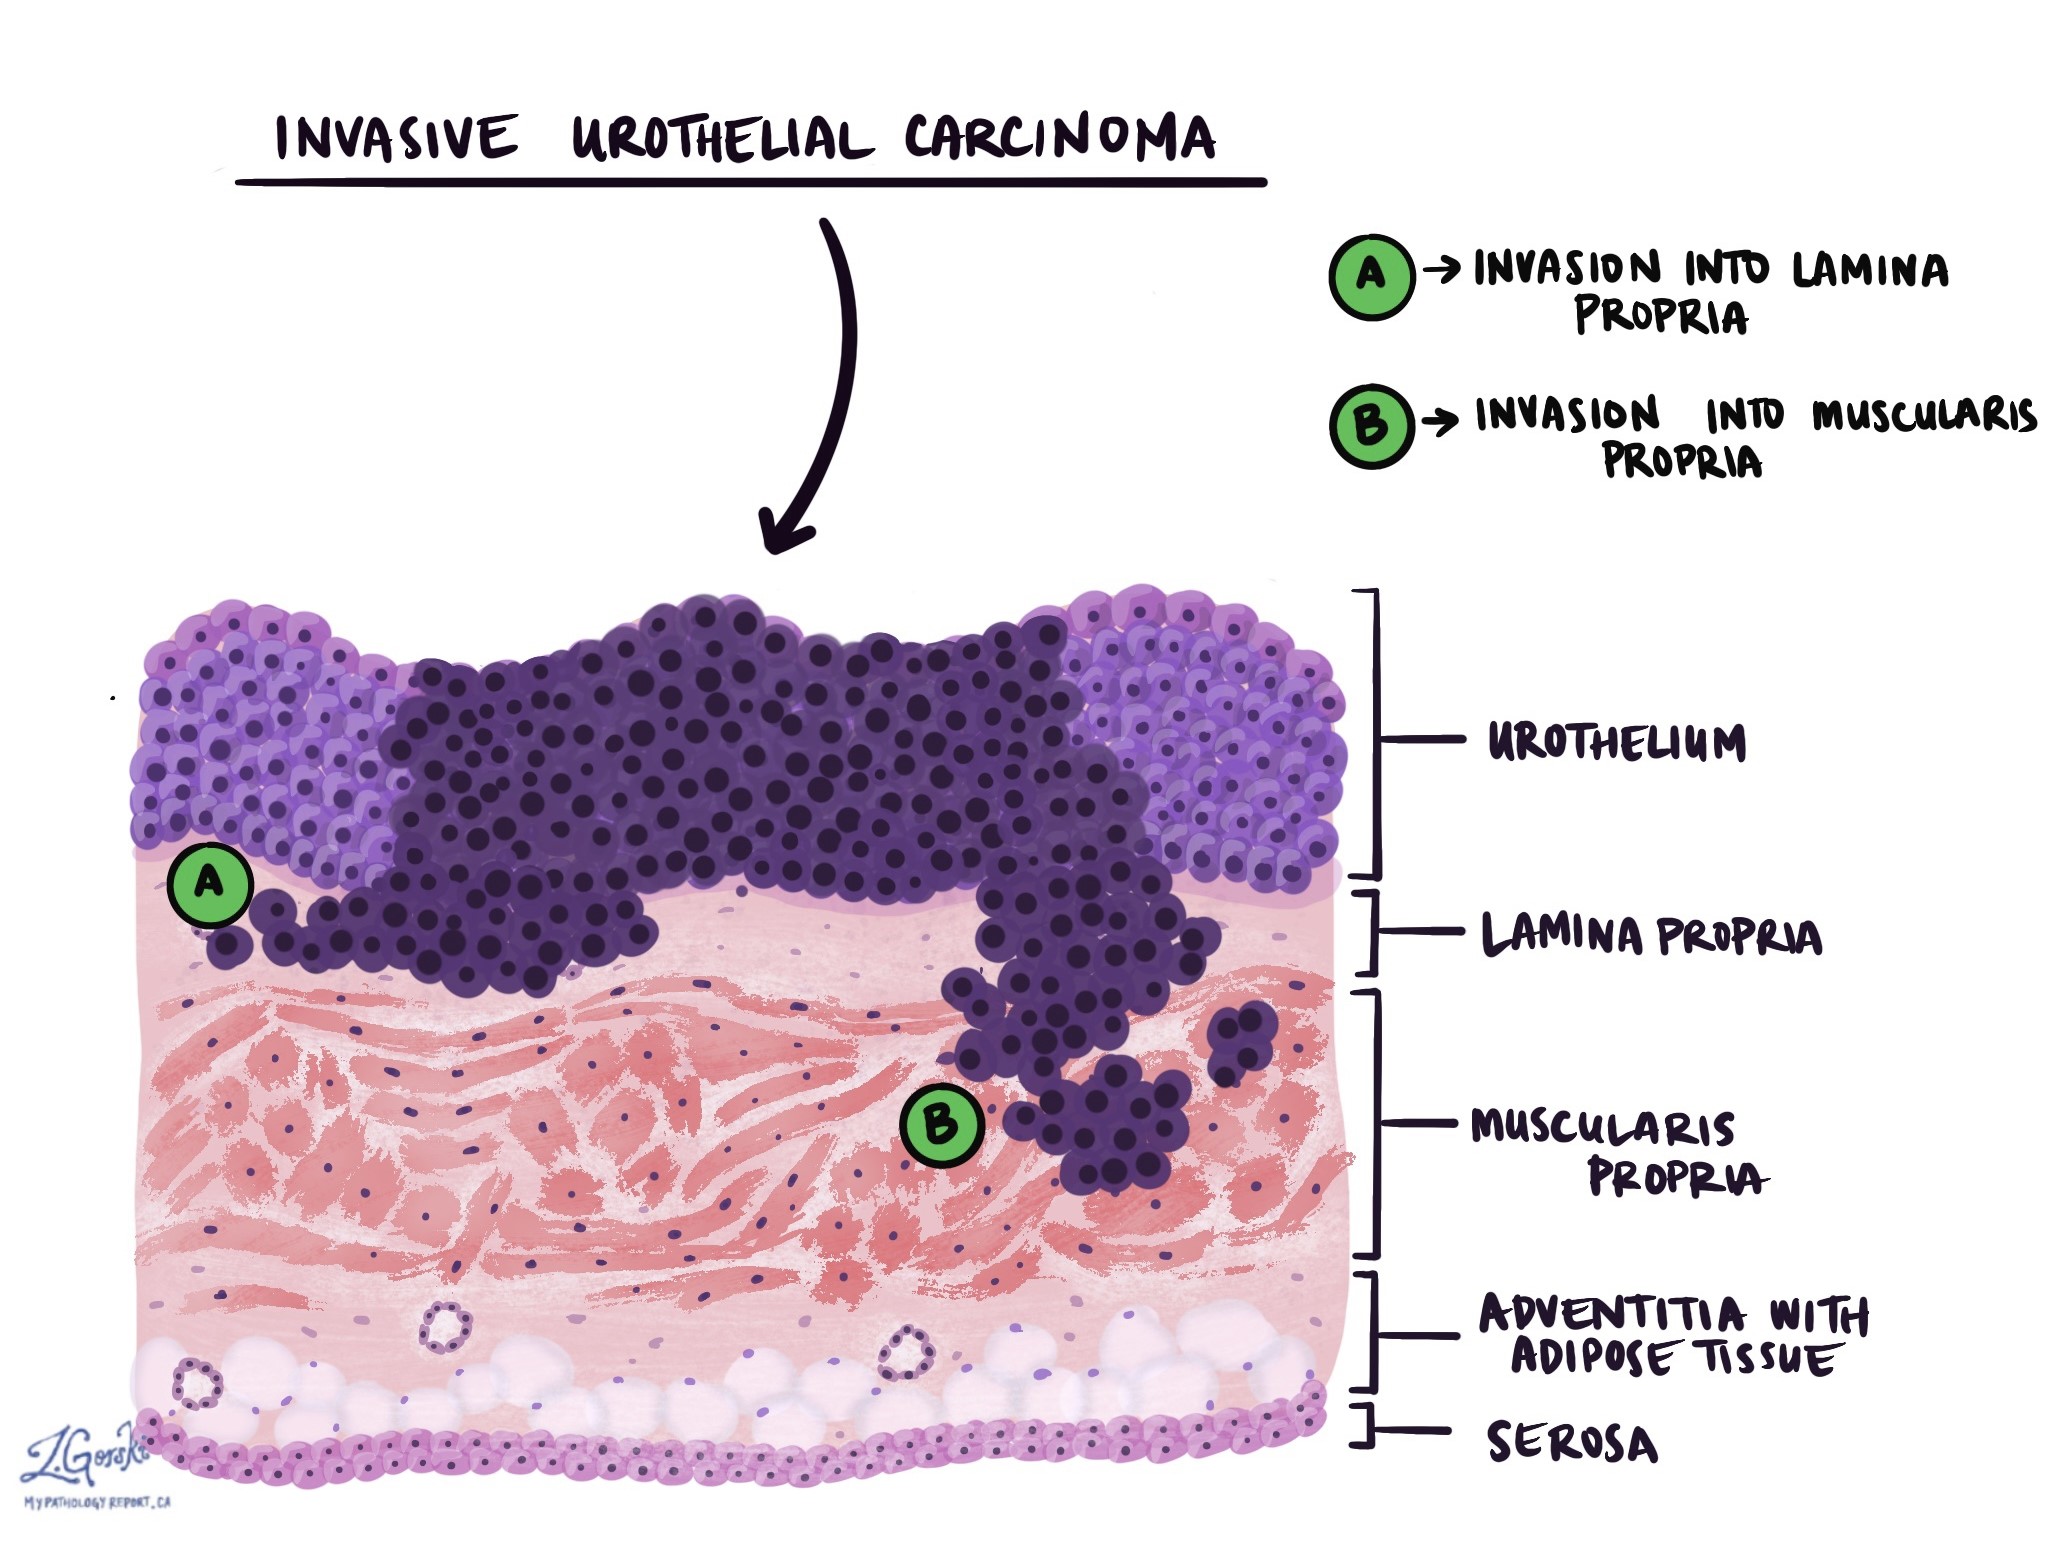 Karsinoma urothelial invasif